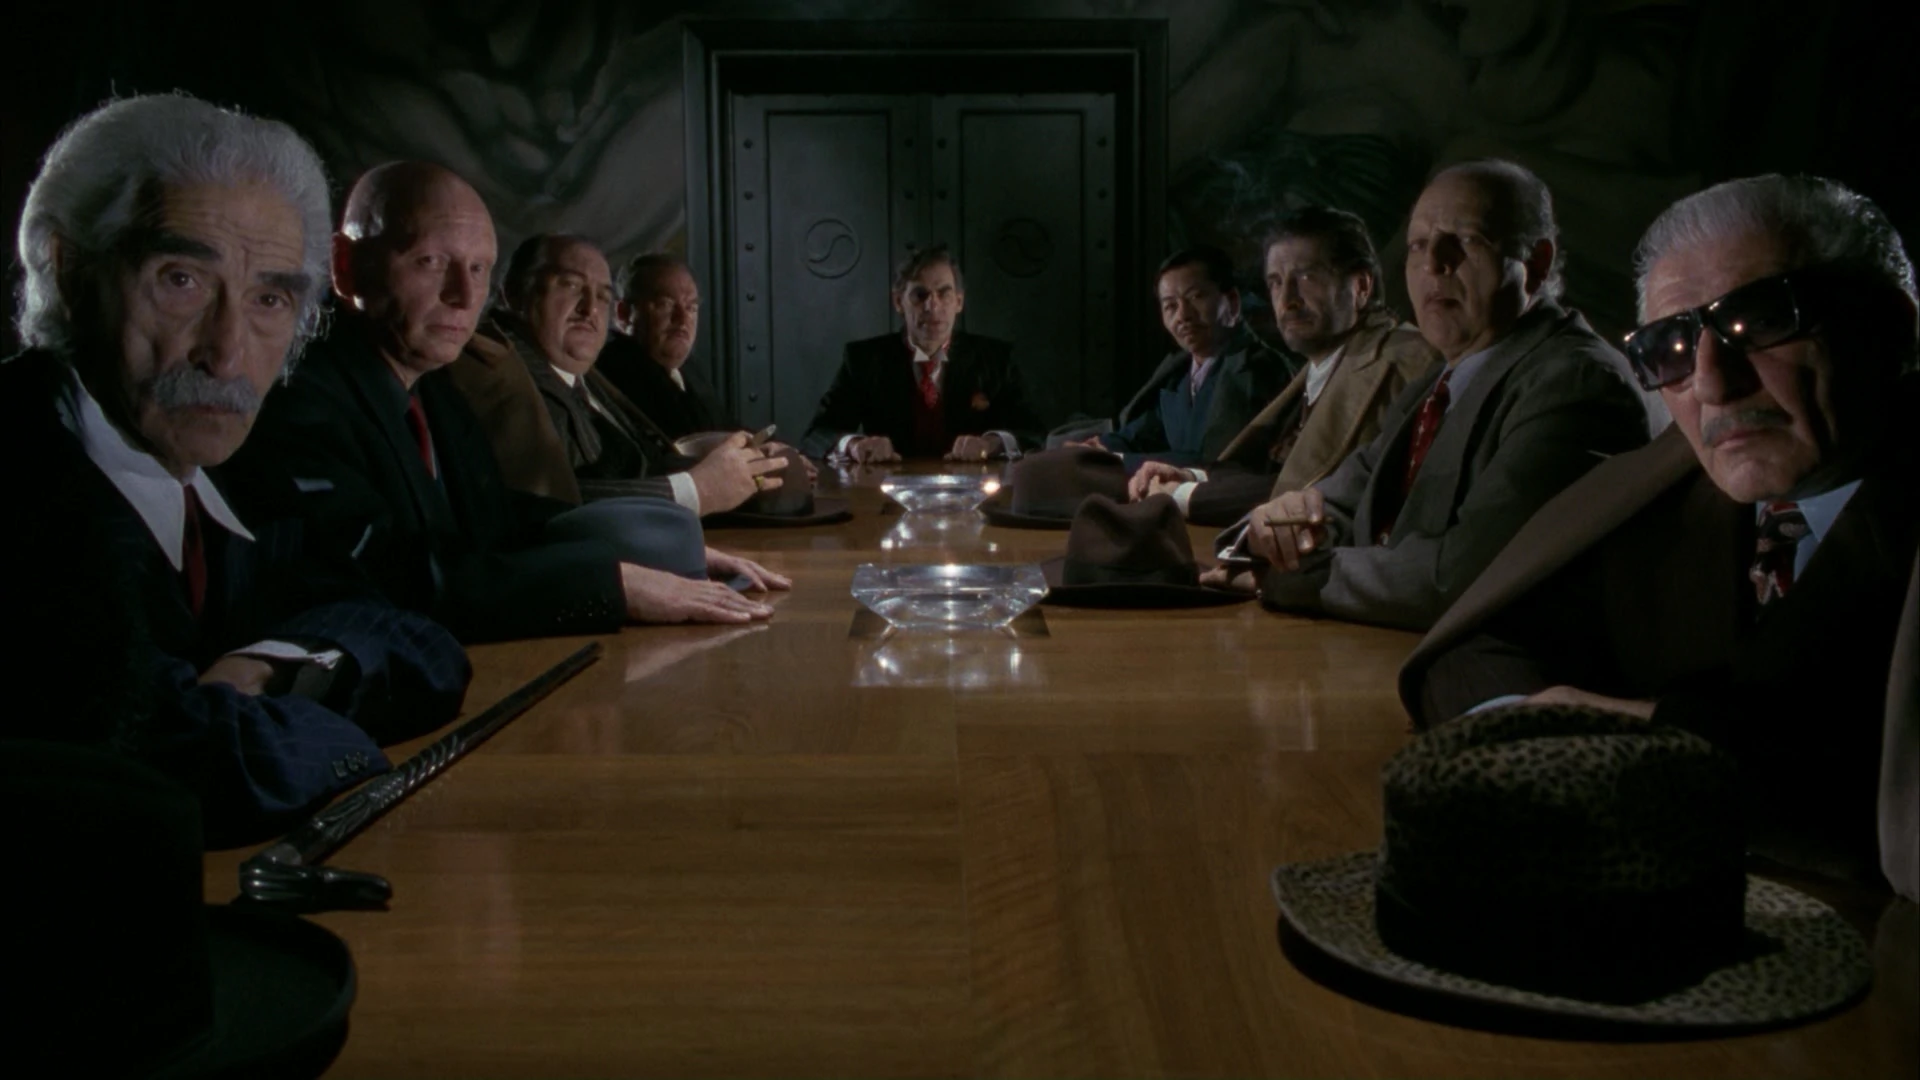  "mafia meeting.webp"